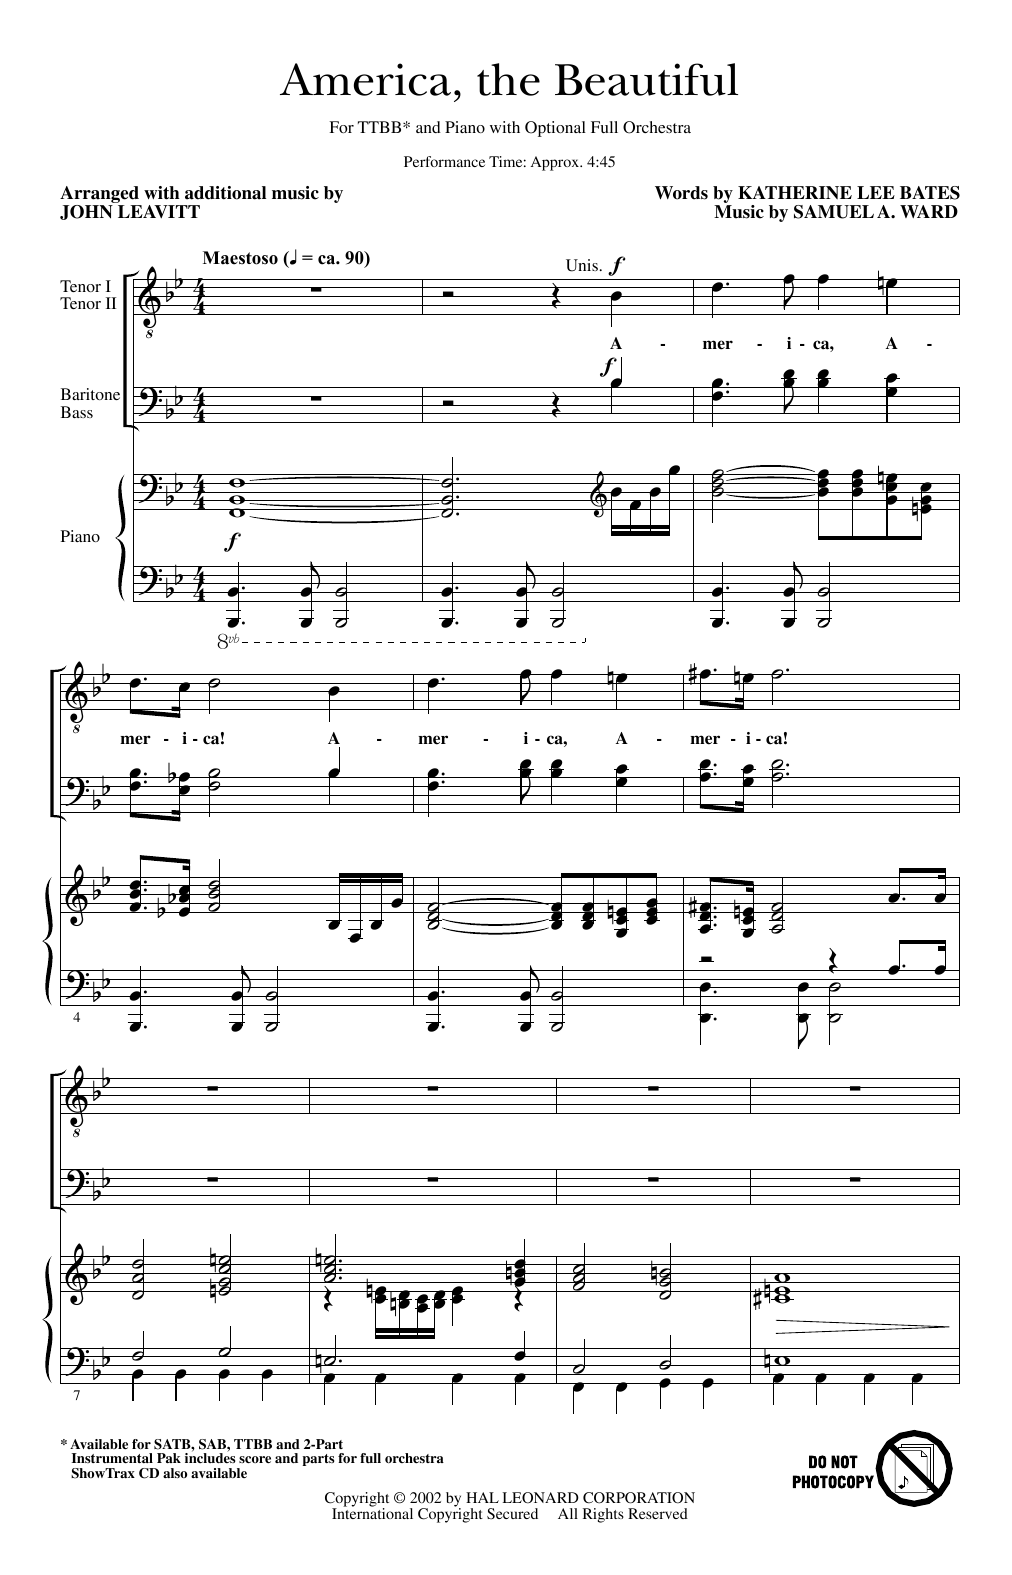 Samuel A. Ward America, The Beautiful (arr. John Leavitt) Sheet Music Notes & Chords for TTBB Choir - Download or Print PDF